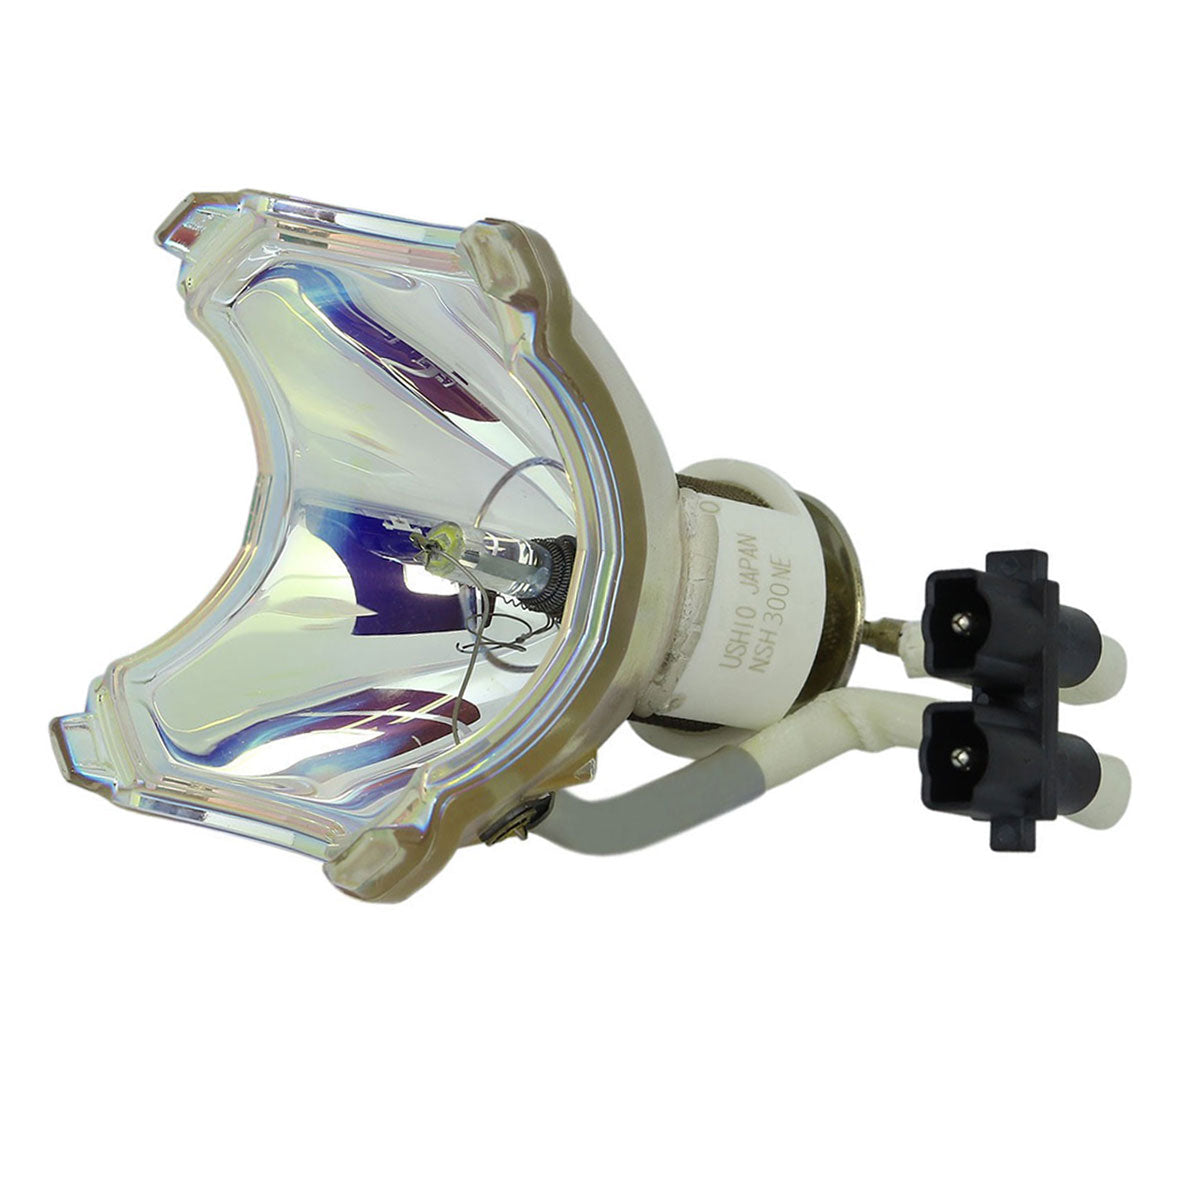 Dukane 456-8946 Ushio Projector Bare Lamp